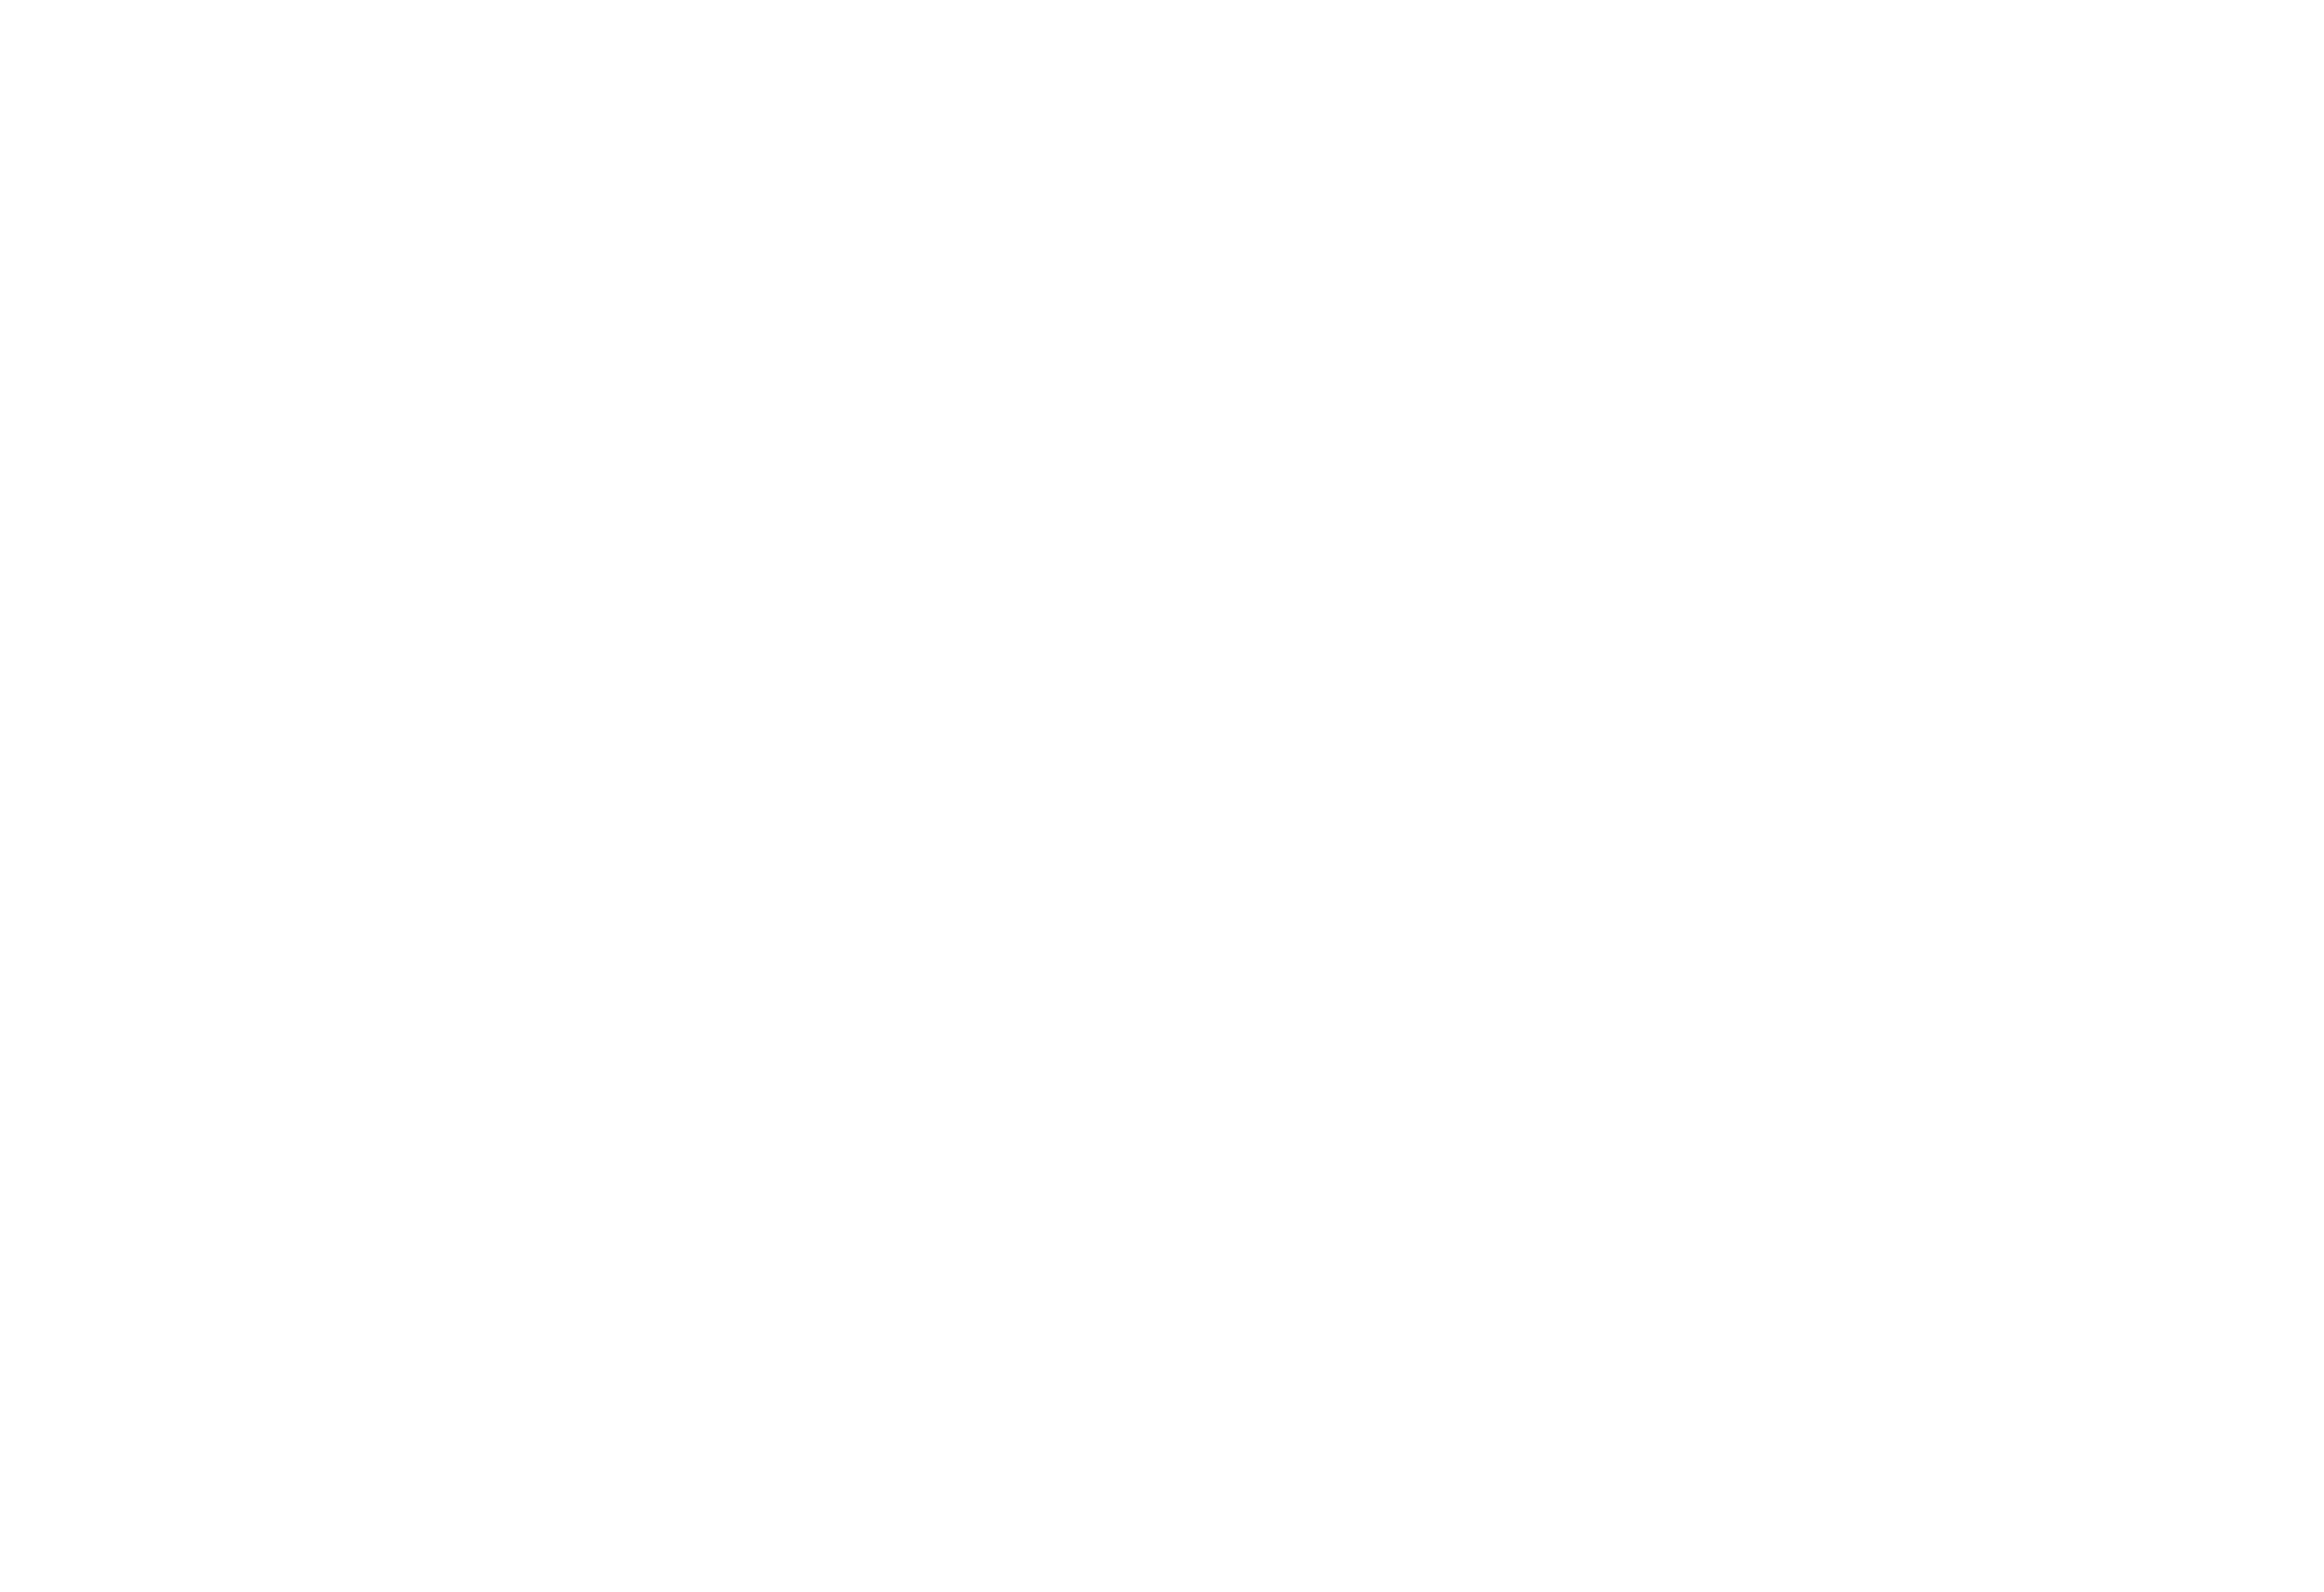 My Airhead Trips